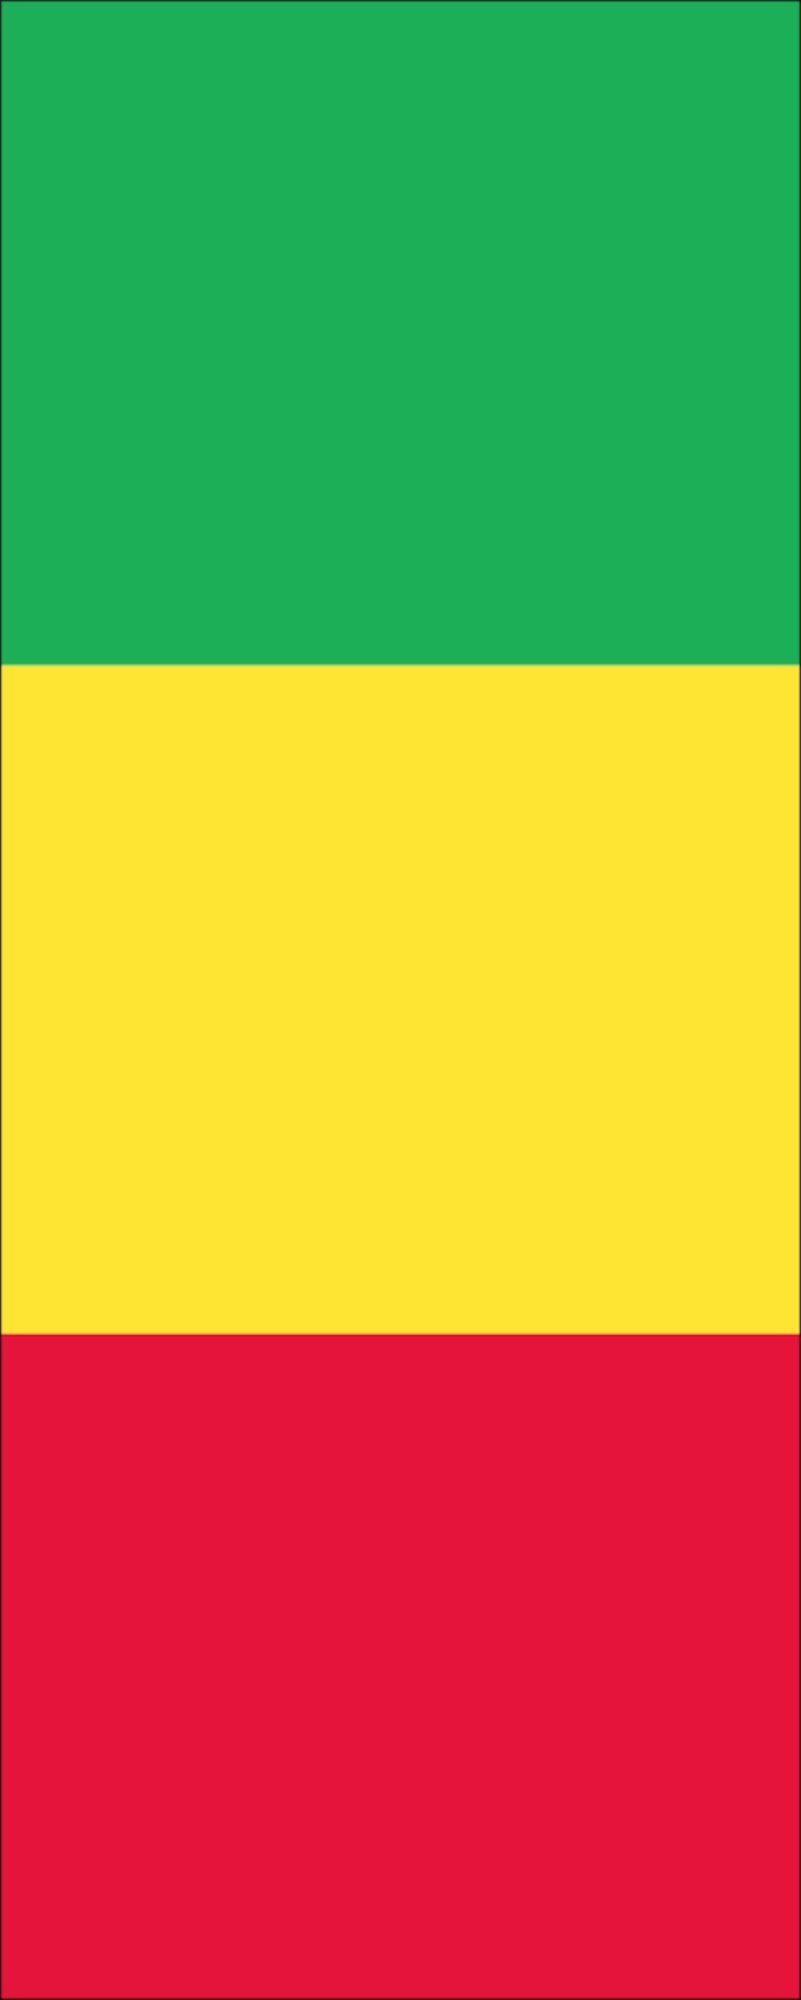 Flagge flaggenmeer 160 Hochformat g/m² Mali